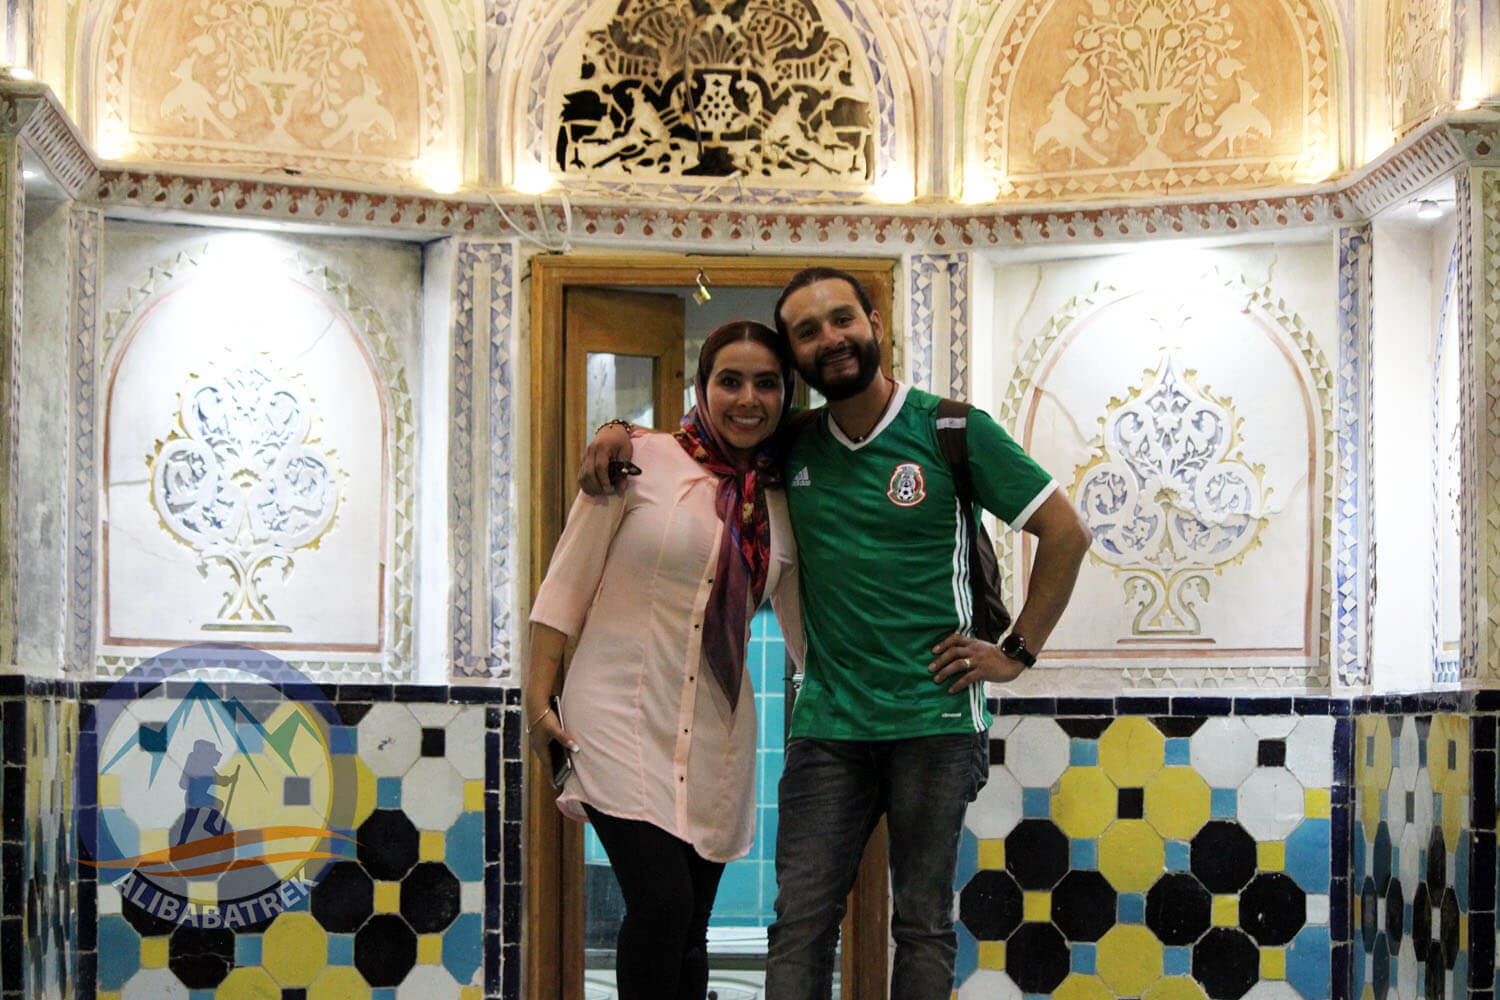 Alibabatrek iran tour packages Tour in iran Persia tour Iran cultural tour Fin Bath2